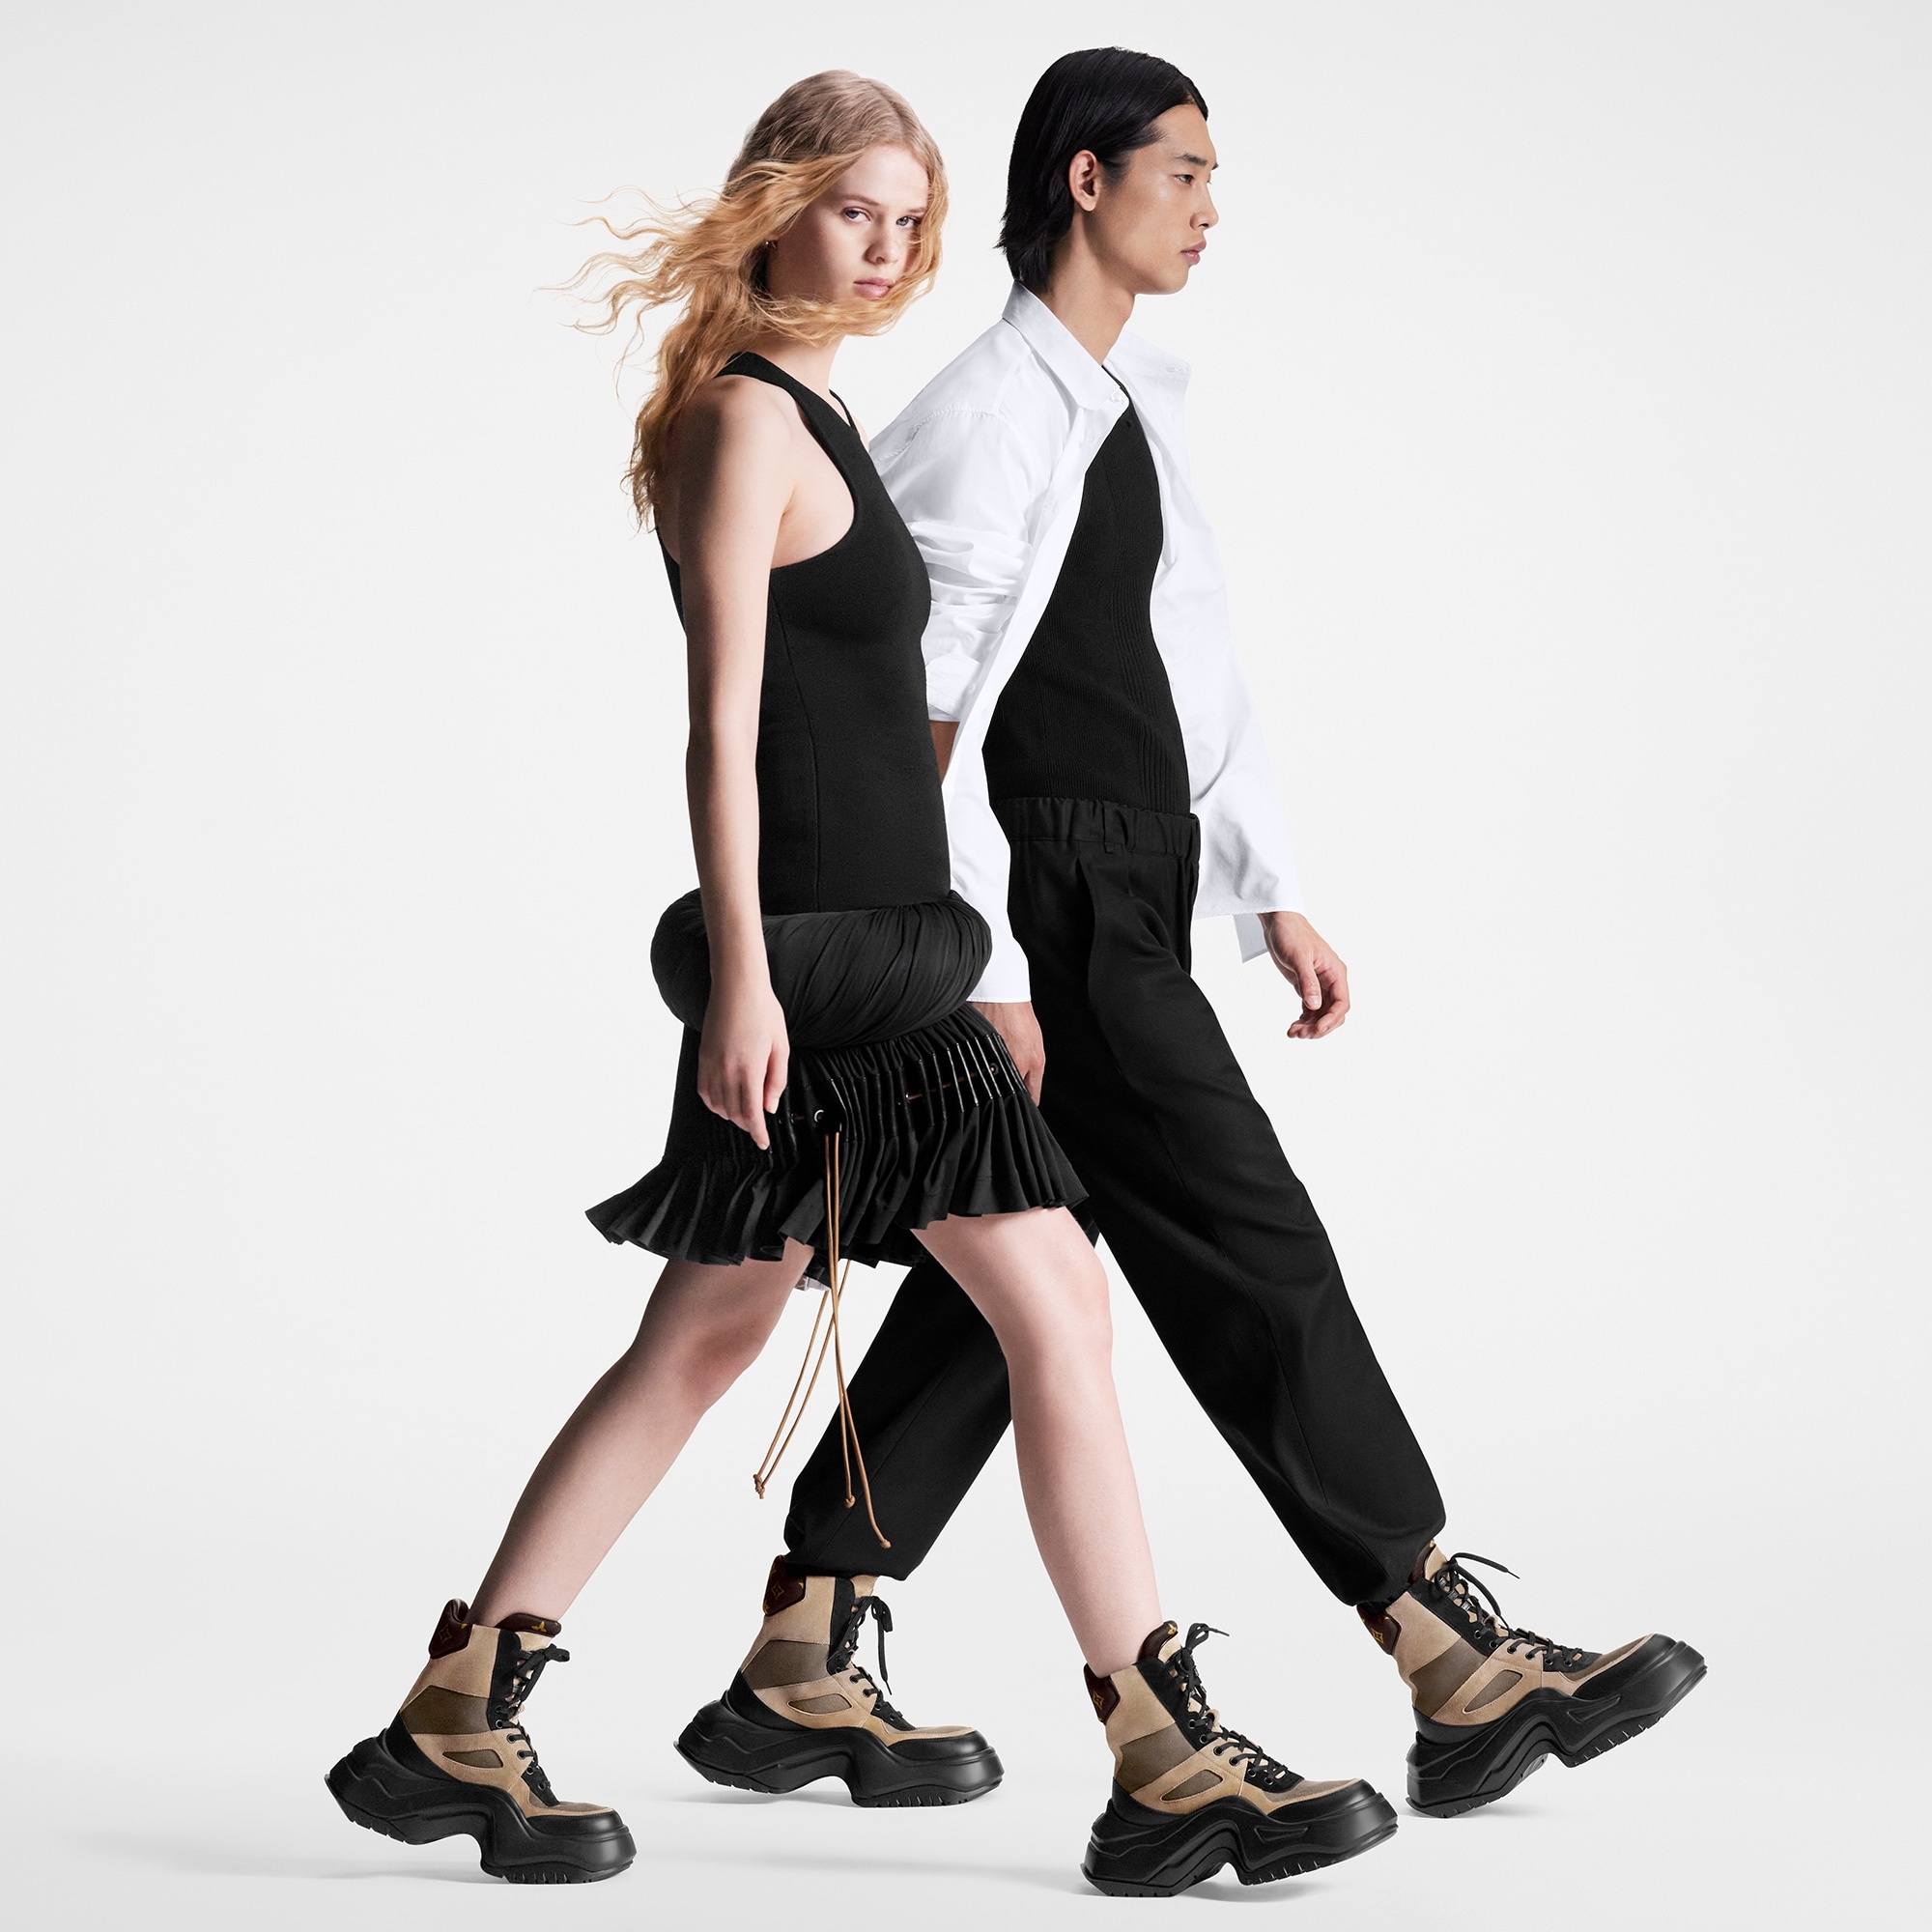 Louis Vuitton Archlight 2.0 Sneaker Release Date